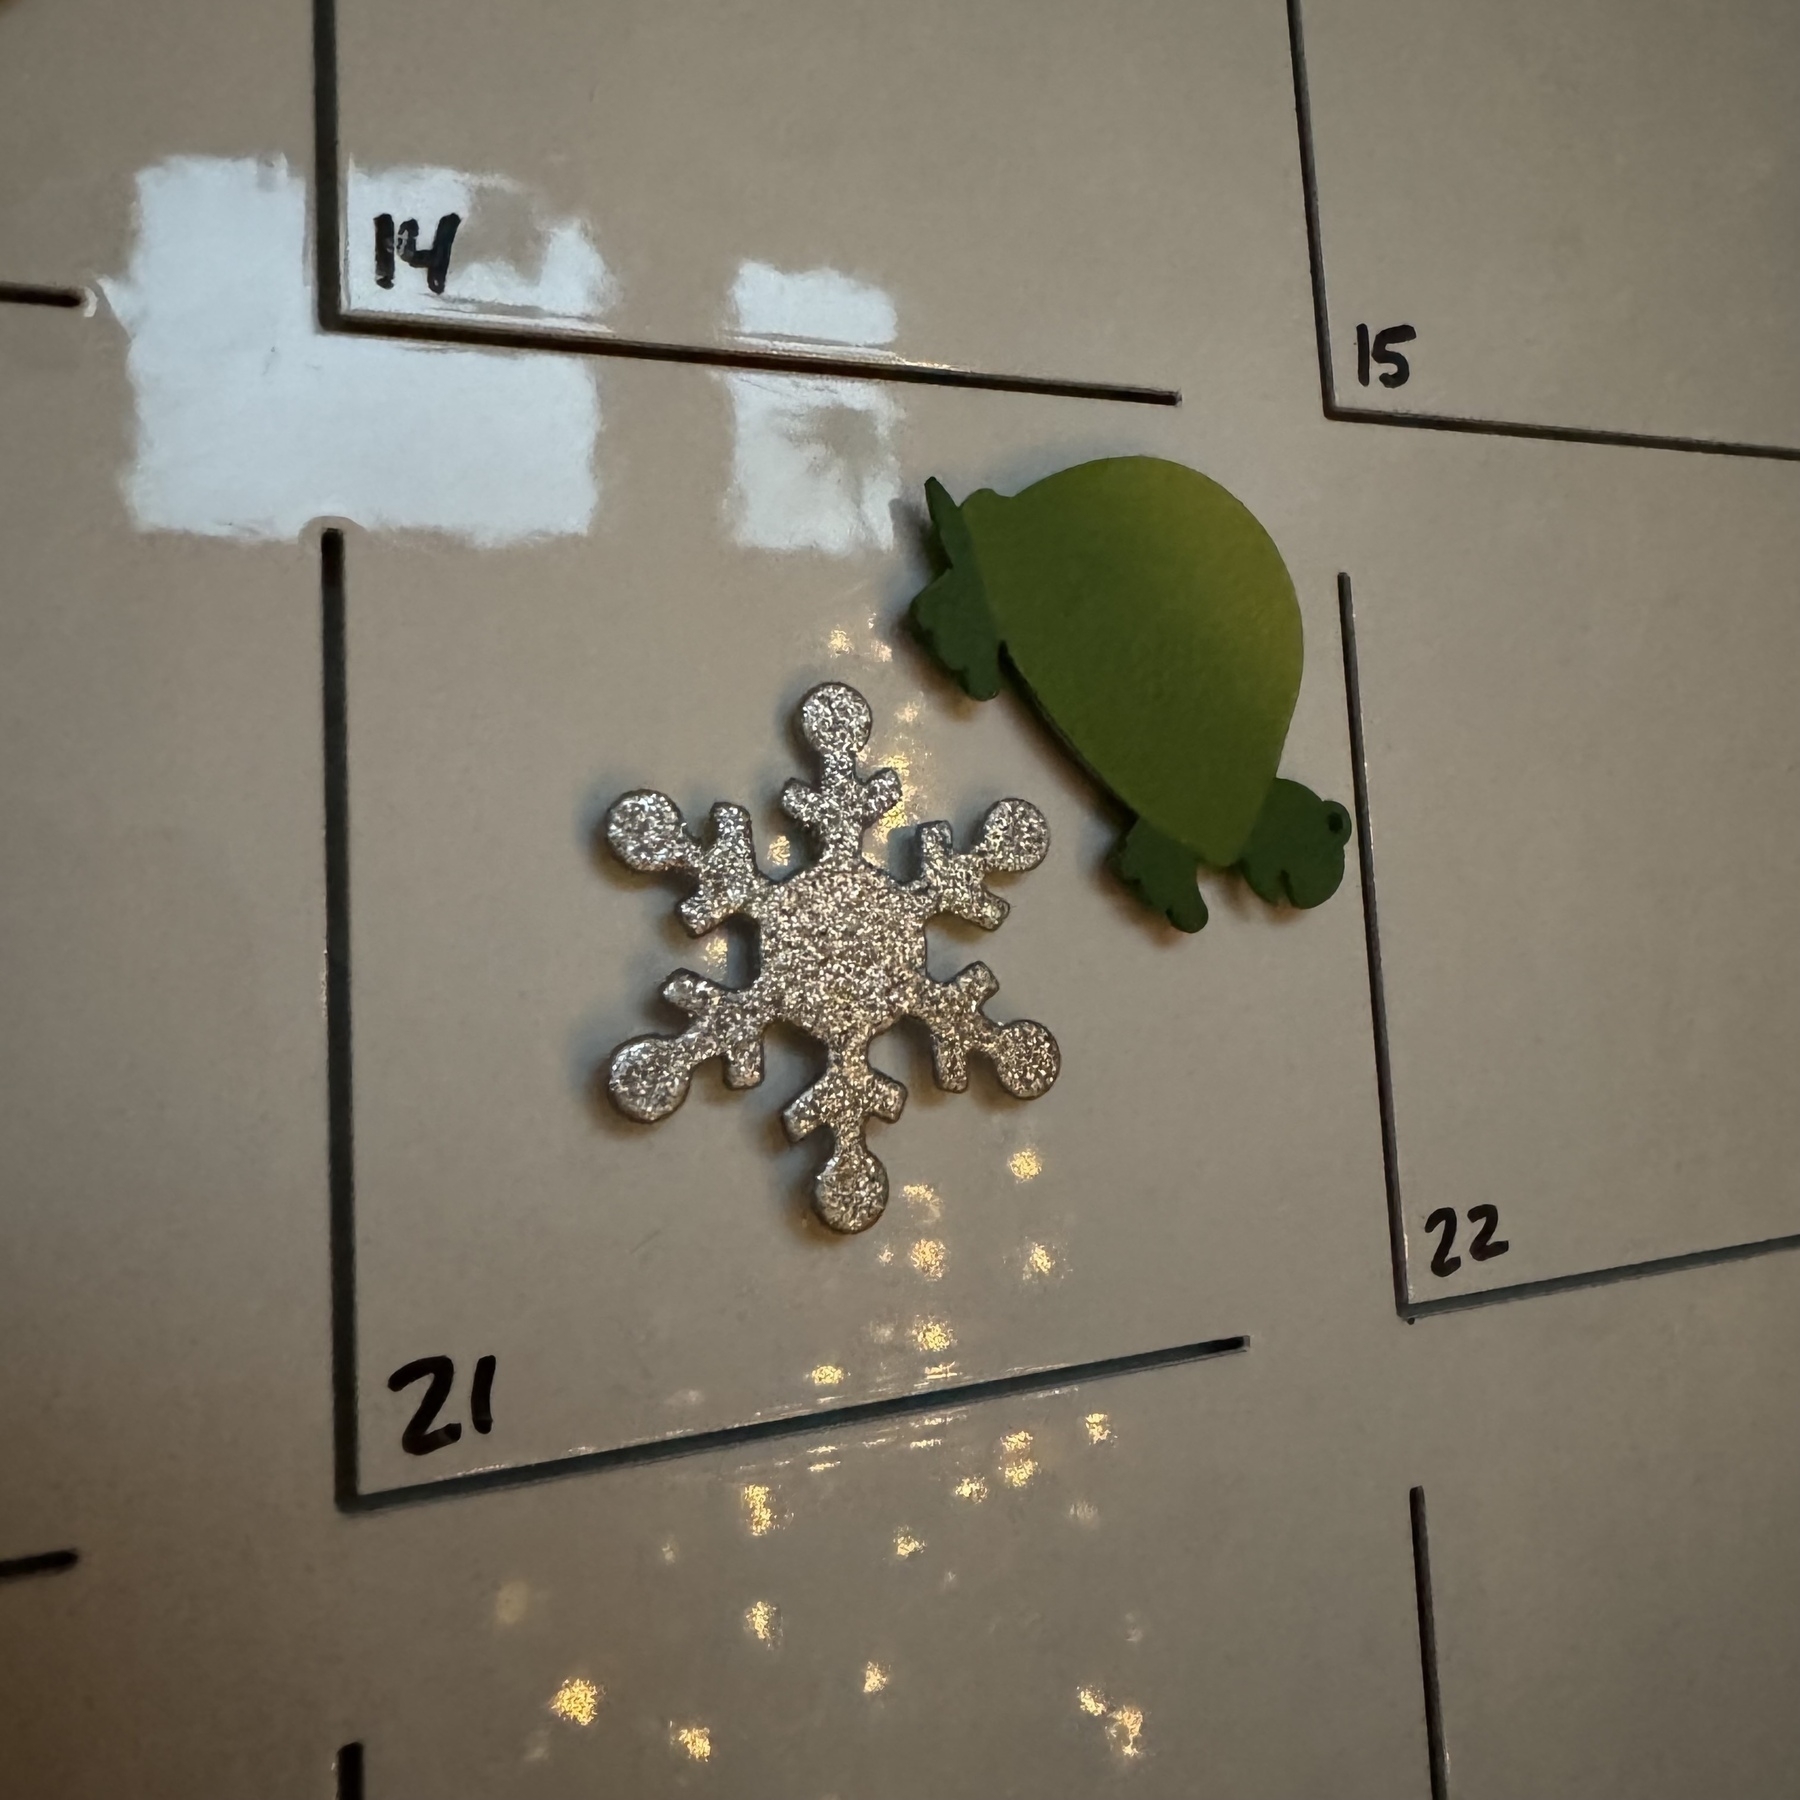 Snowflake magnet on calendar